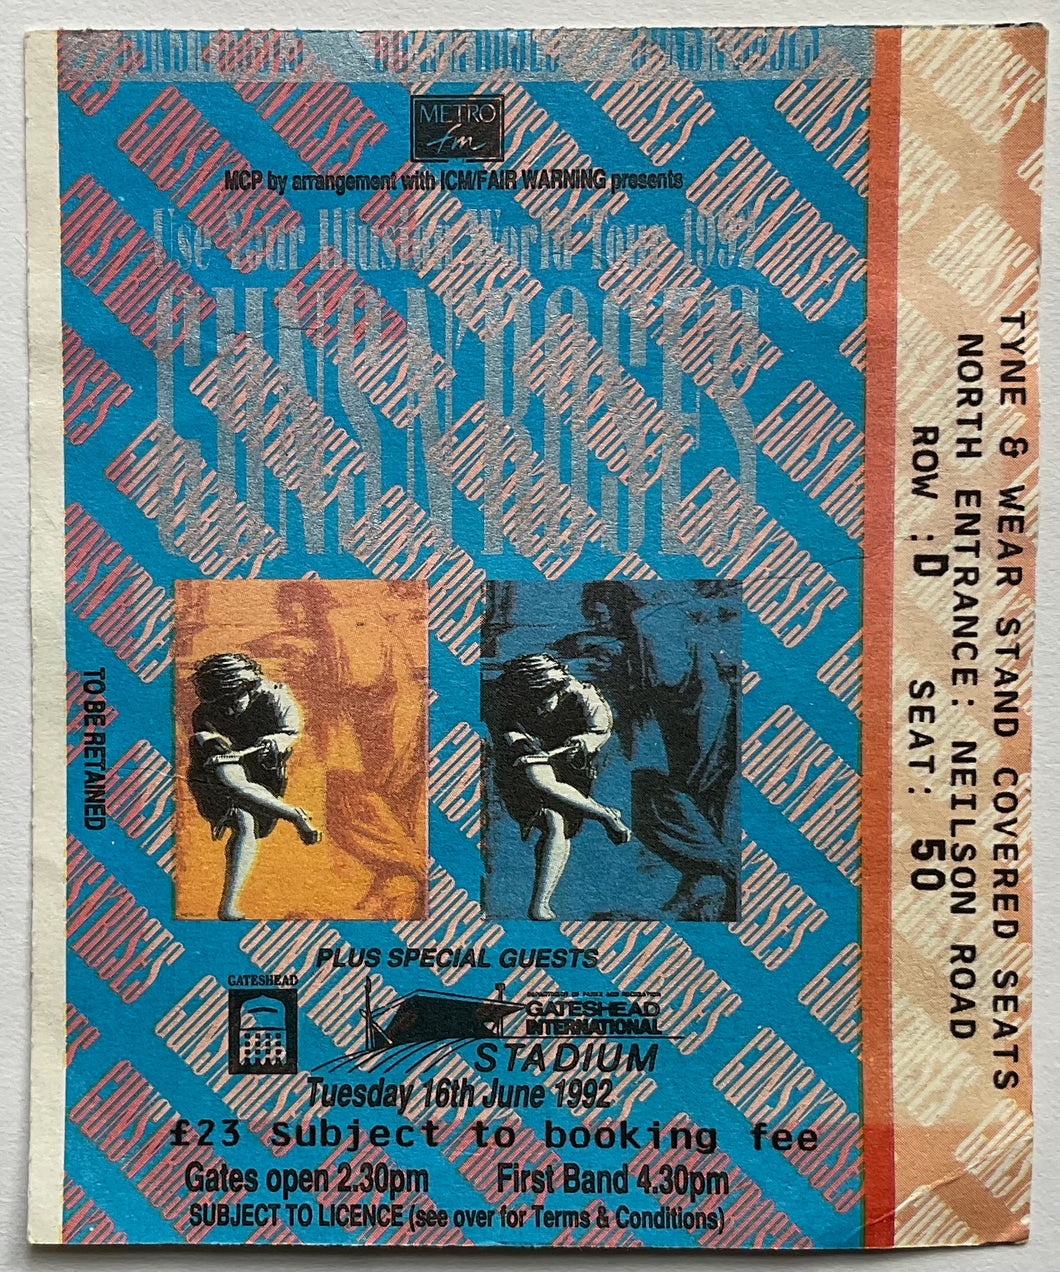 Guns N' Roses Original Used Concert Ticket Gateshead Stadium 16th Jun 1992